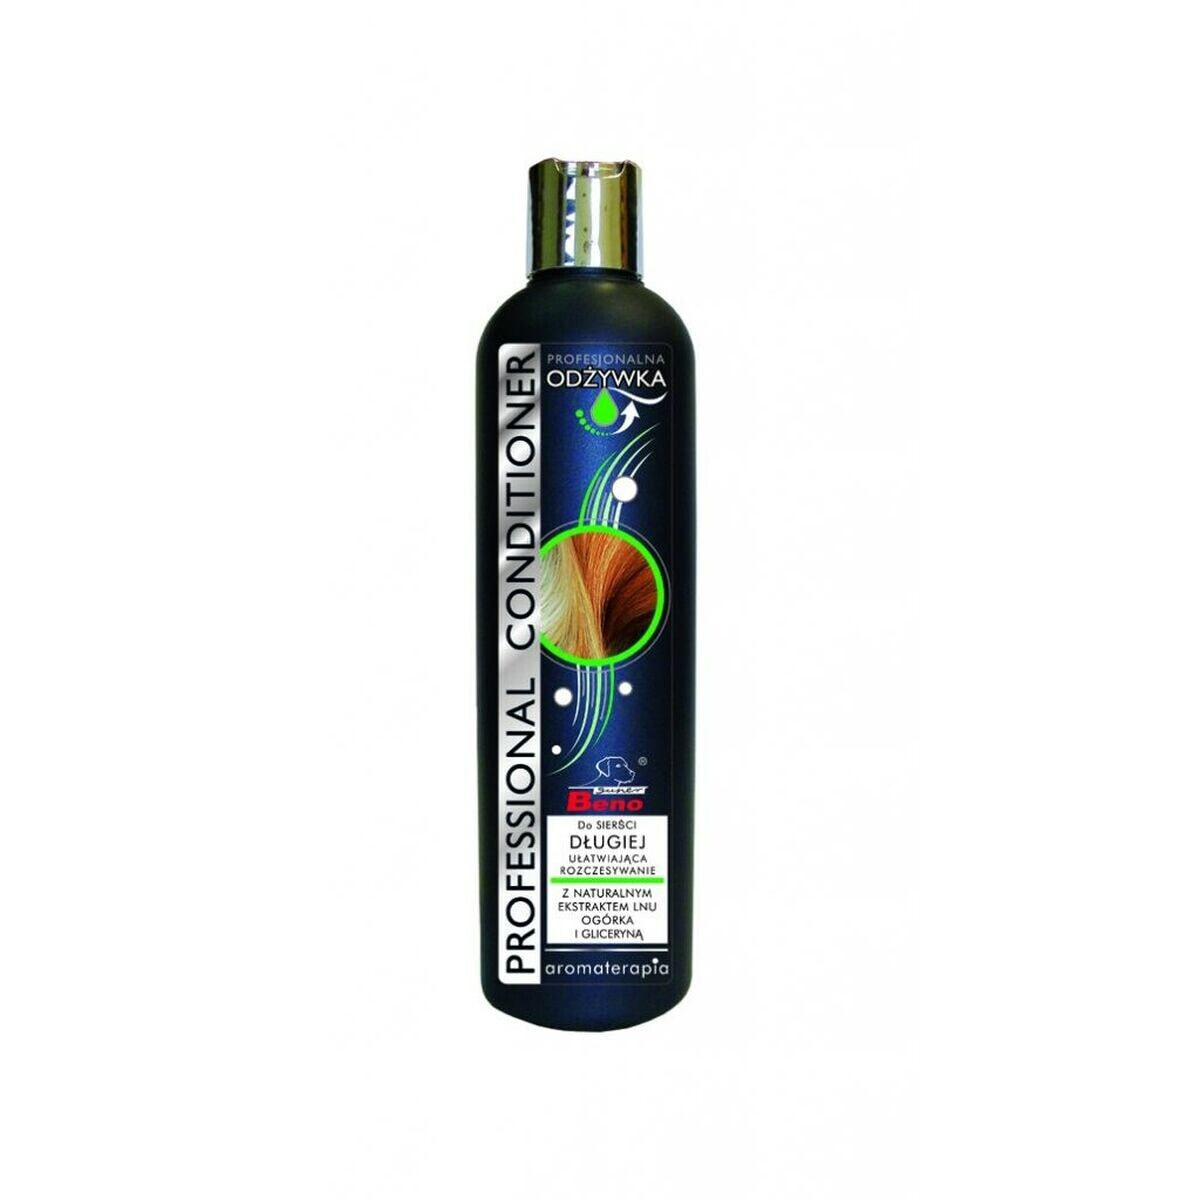 Shampoo and Conditioner Certech 16885 250 ml